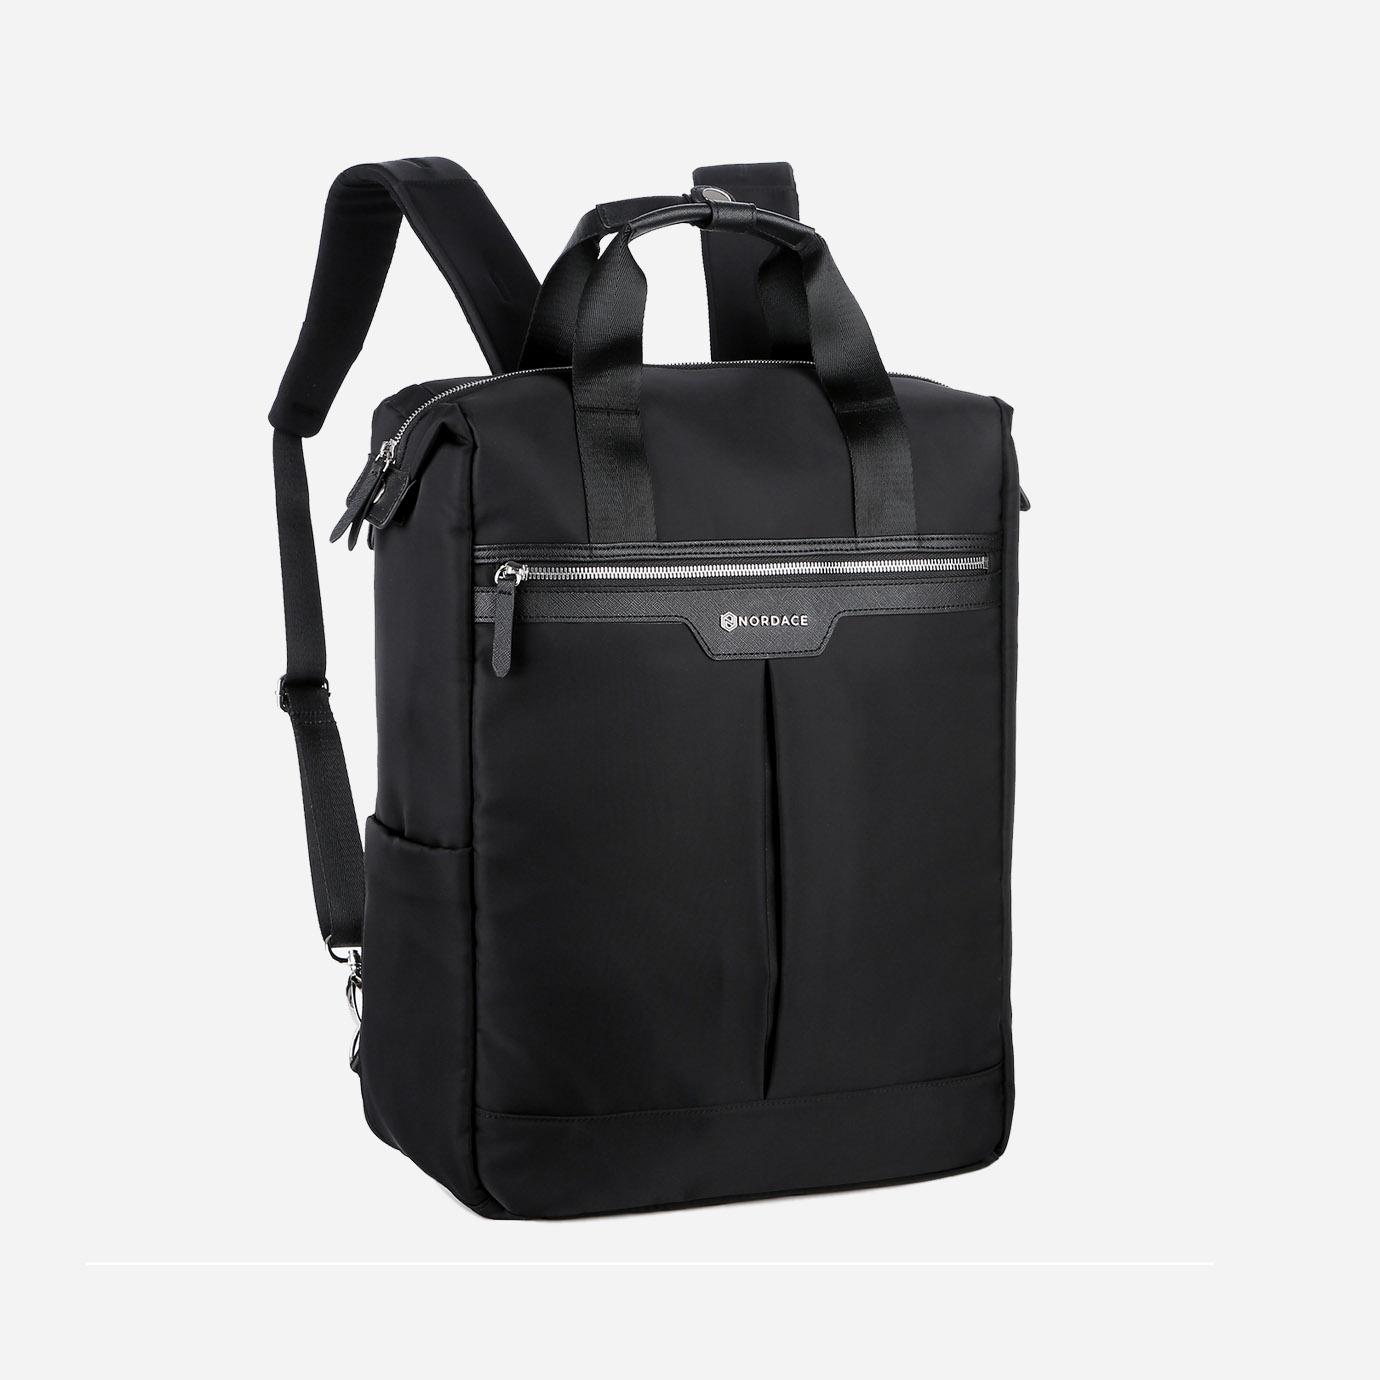 Nordace Bags | Gisborne - Smart Totepack